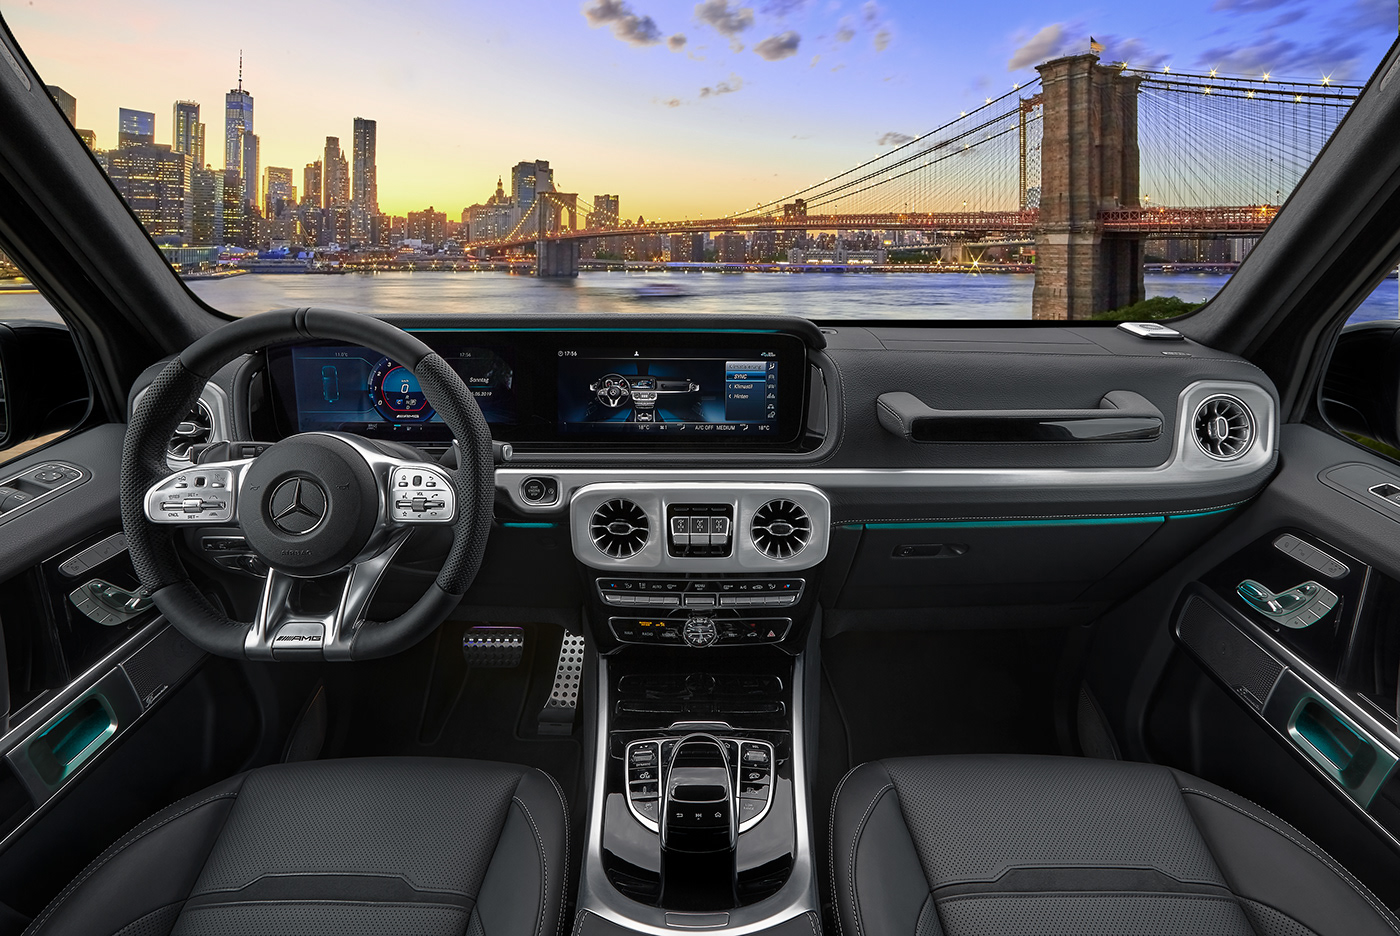 Mercedes AMG G63 Interior on Behance